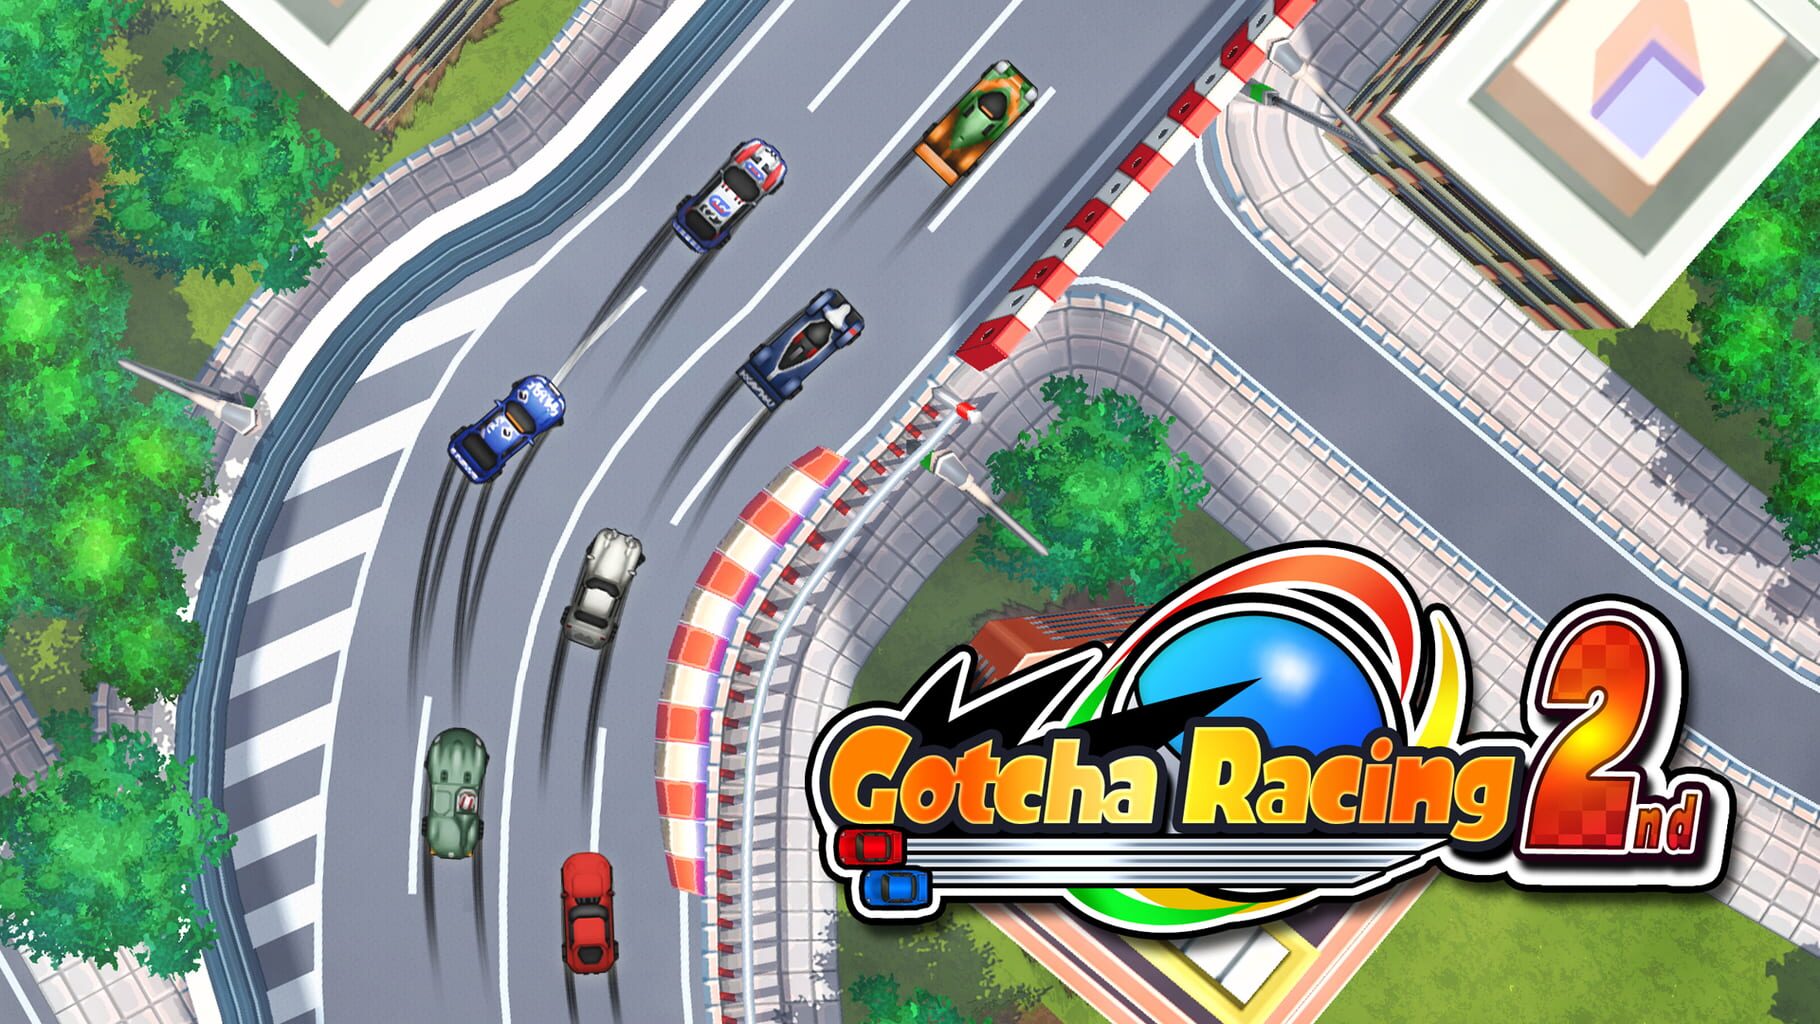 Gotcha Racing 2nd artwork